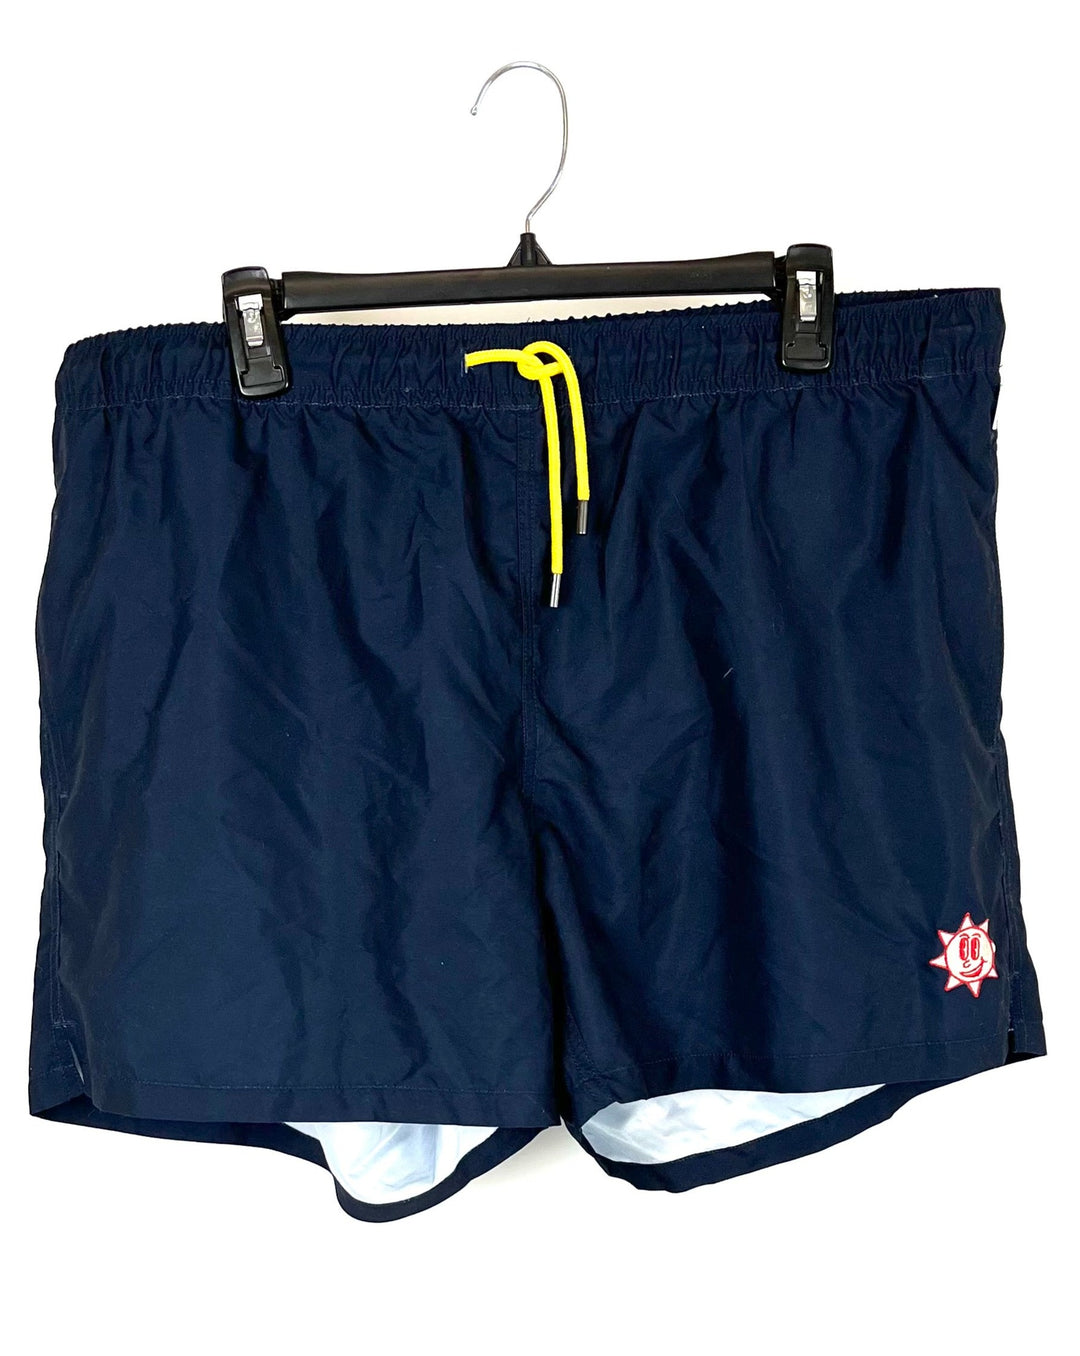 MENS Navy Blue and Yellow Swim Shorts - Size XXL